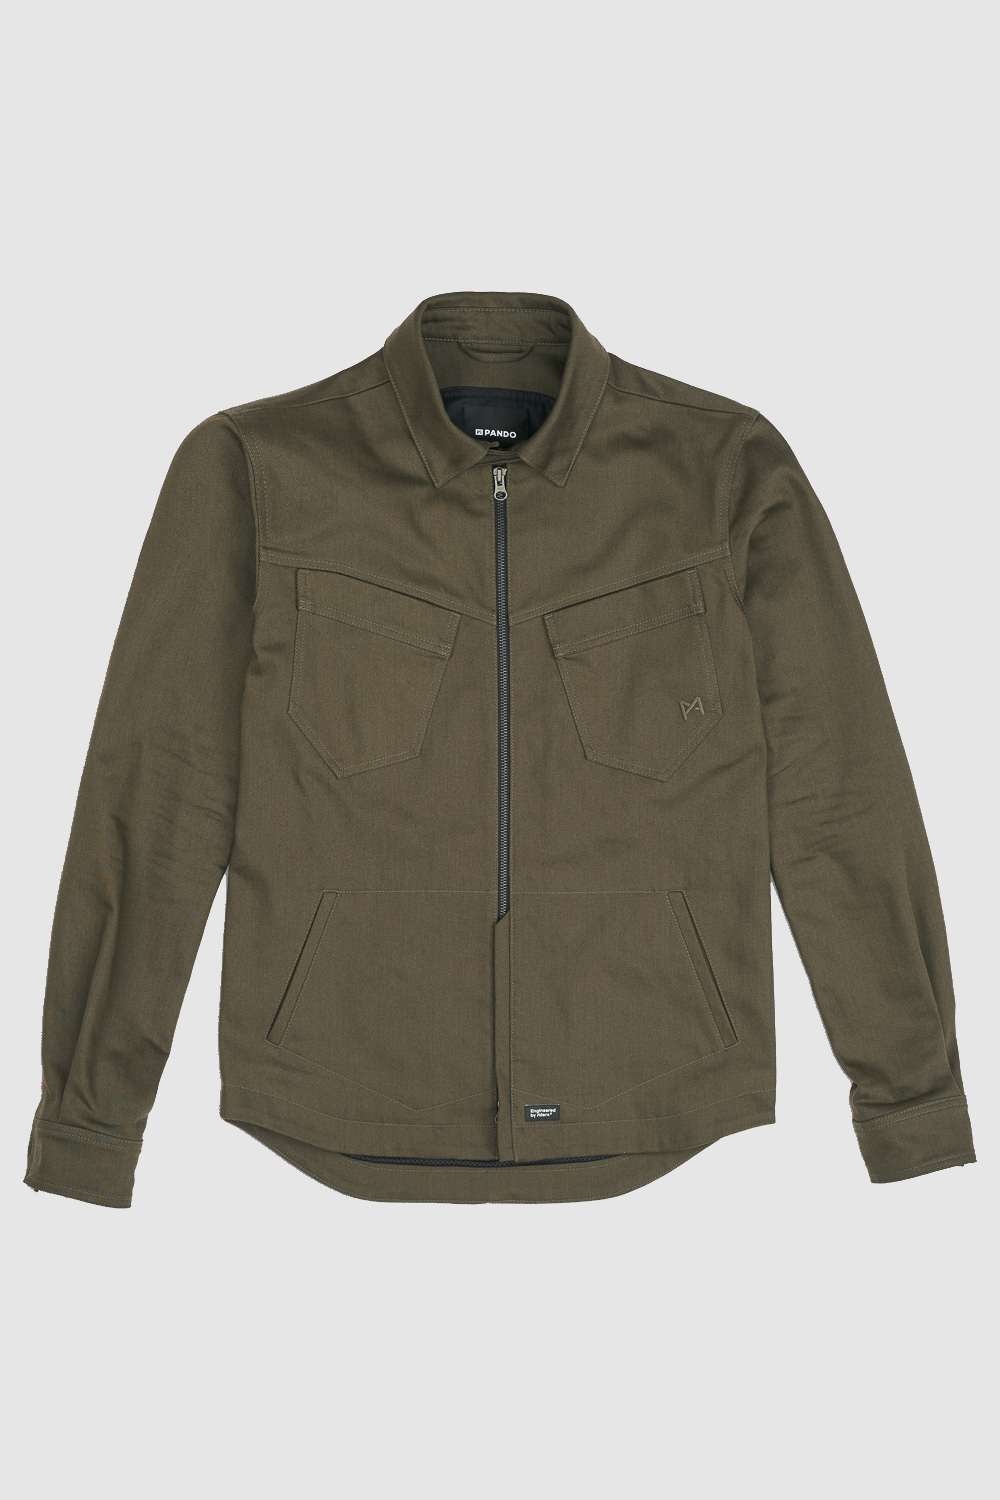 Image of Pando Moto Capo Cor 02 Shirt - Unisex Slim-Fit Cordura Jacke Größe XS